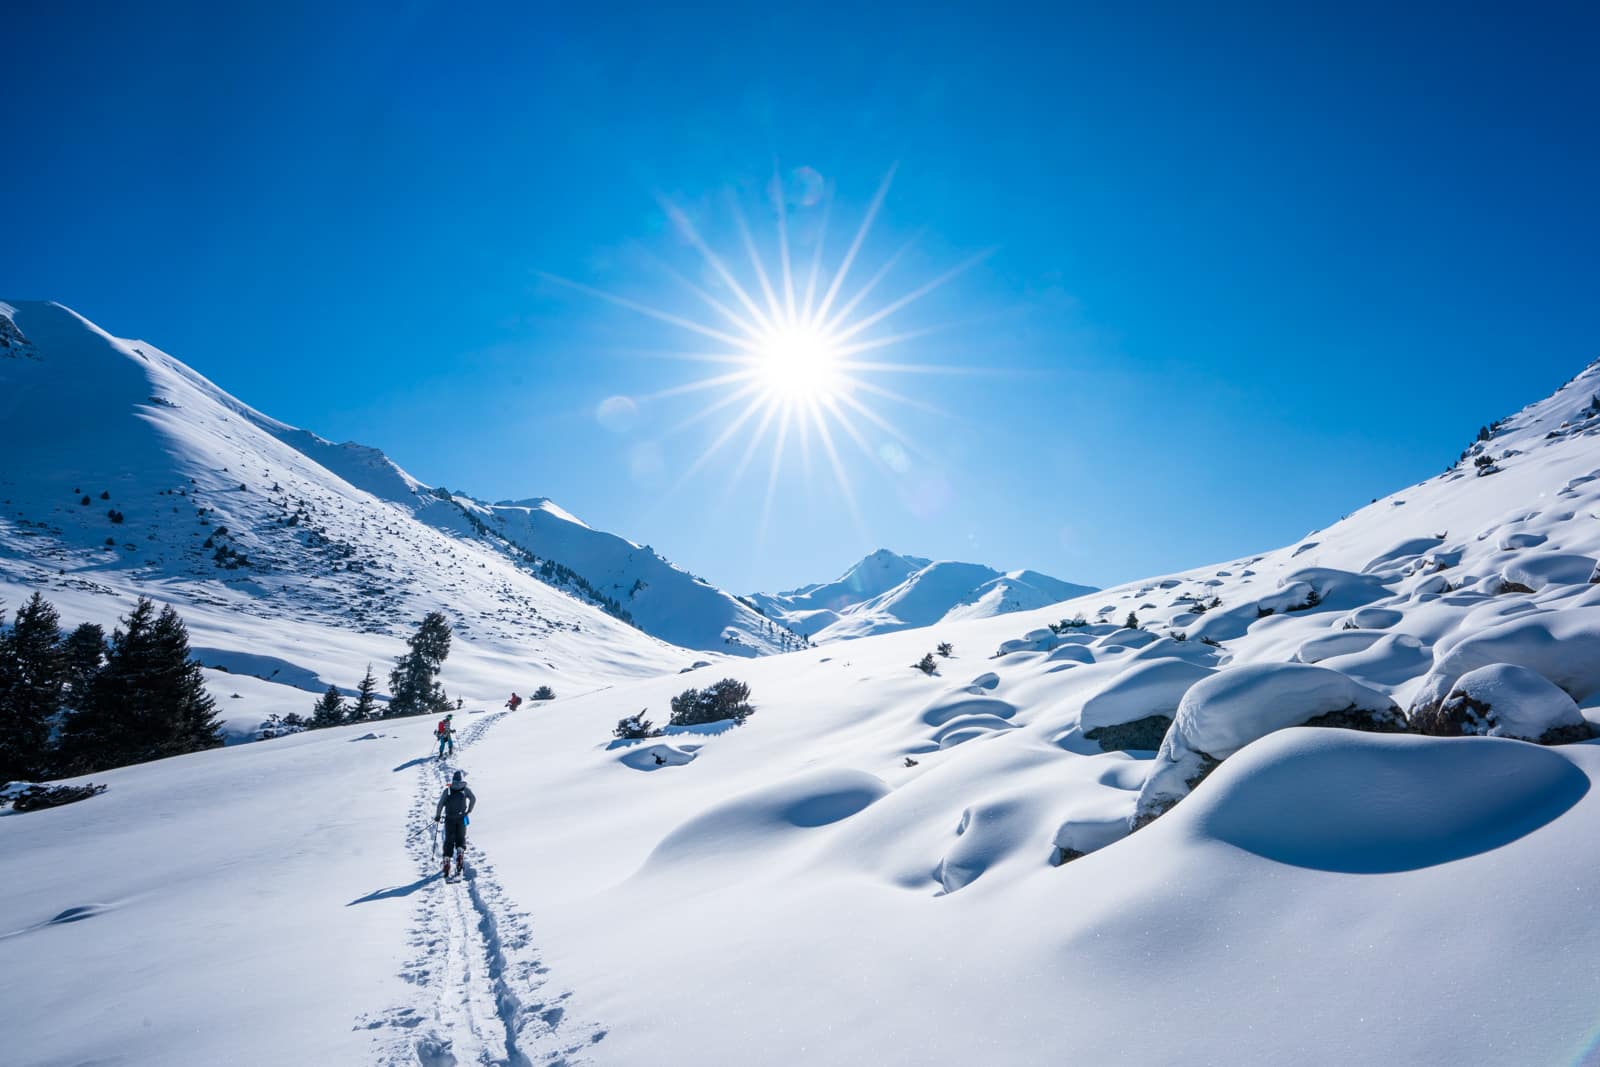 Snowshoeing in mountains near Boz Uchuk, Kyrgyzstan